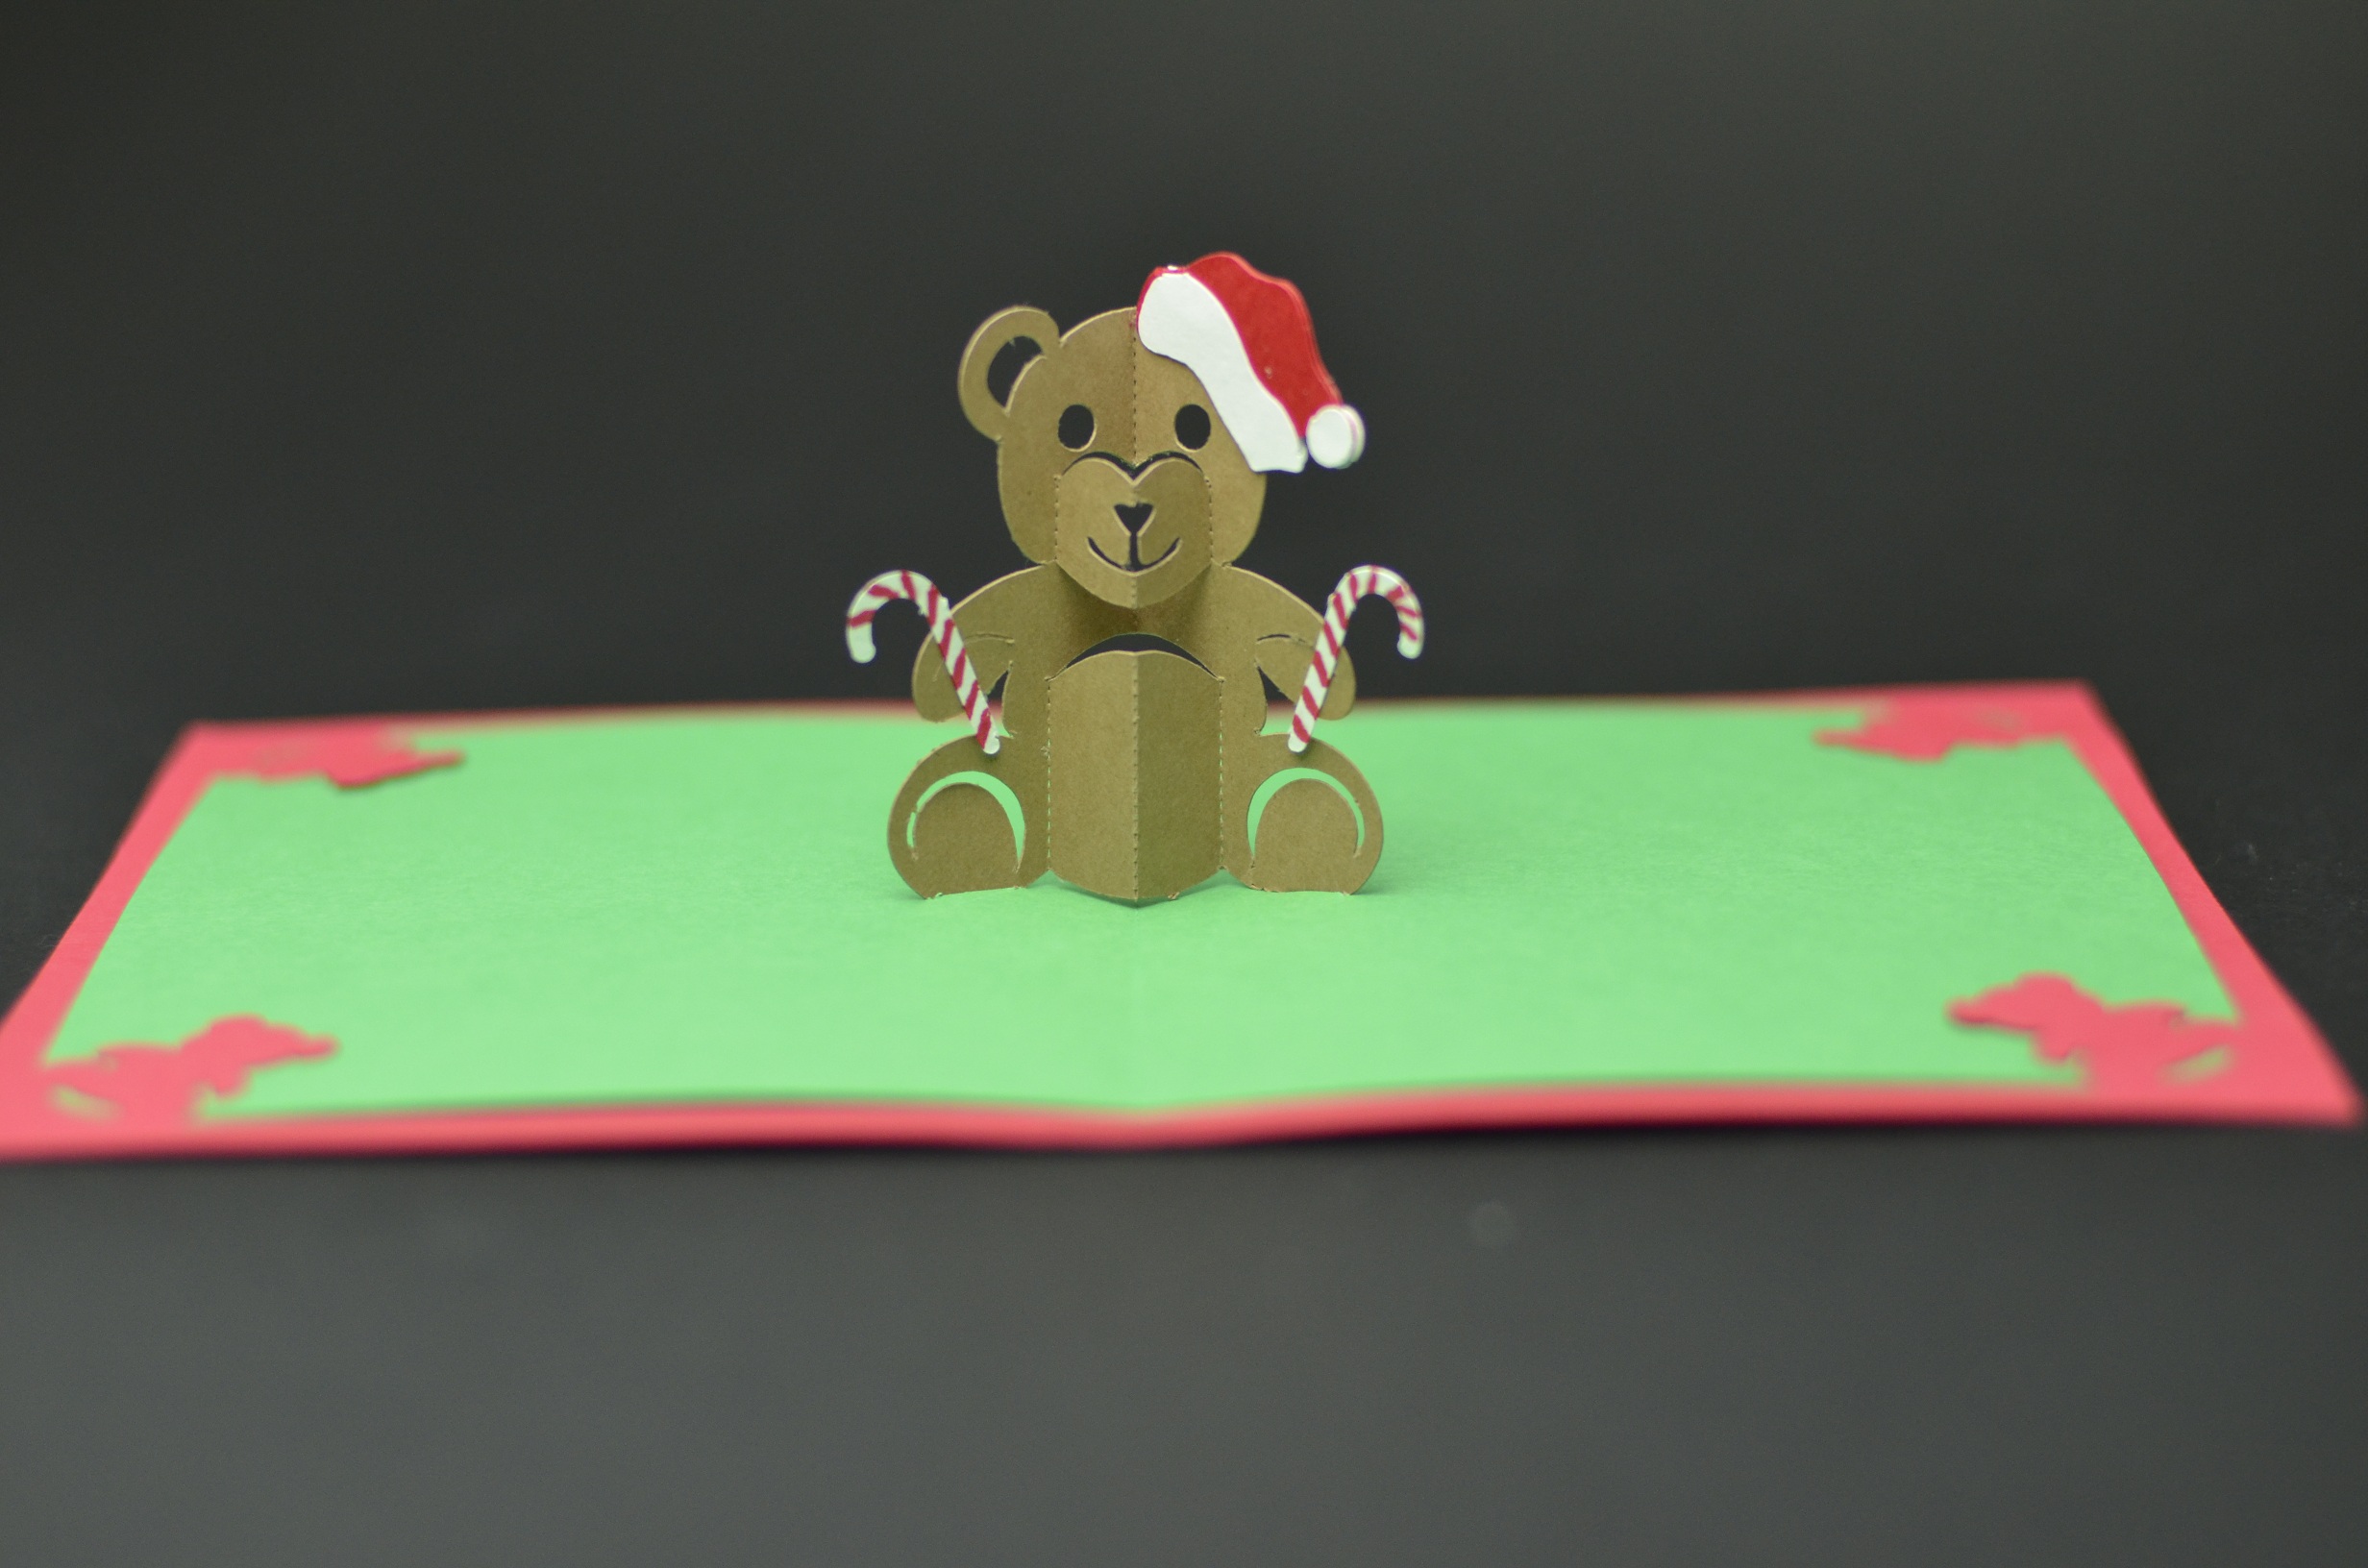 chocoviolet: how to make teddy bear pop up card In Teddy Bear Pop Up Card Template Free